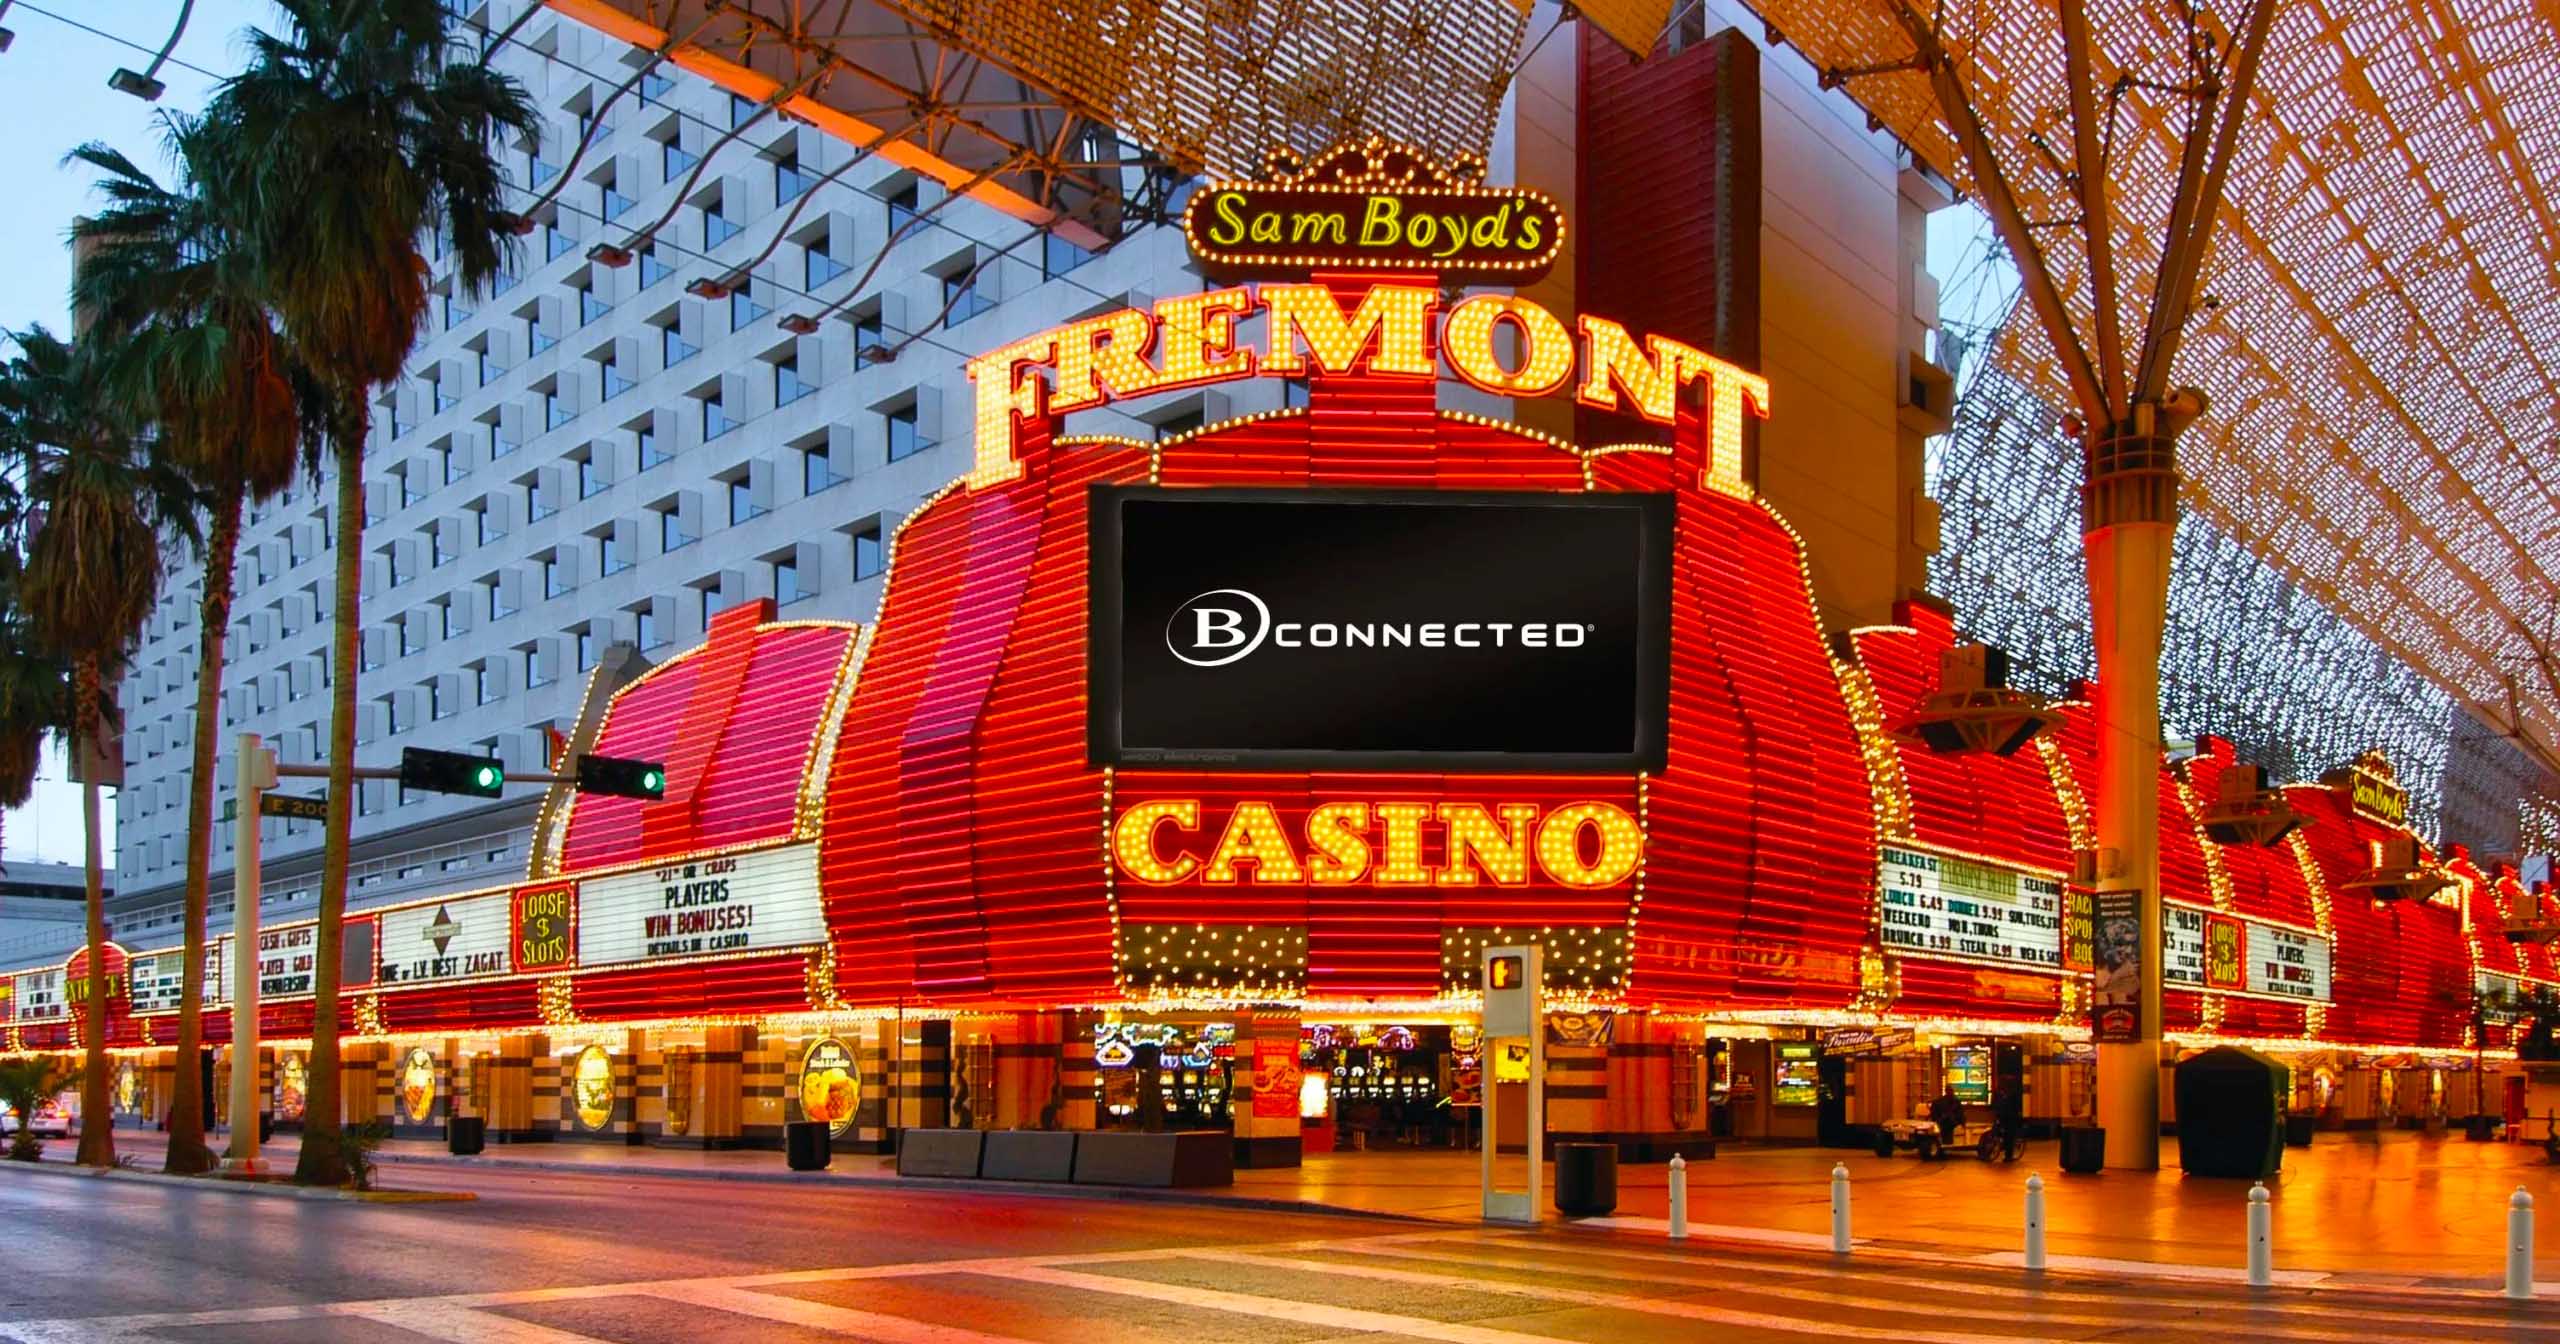 California Hotel & Casino in Downtown Las Vegas - Luxury Hotel